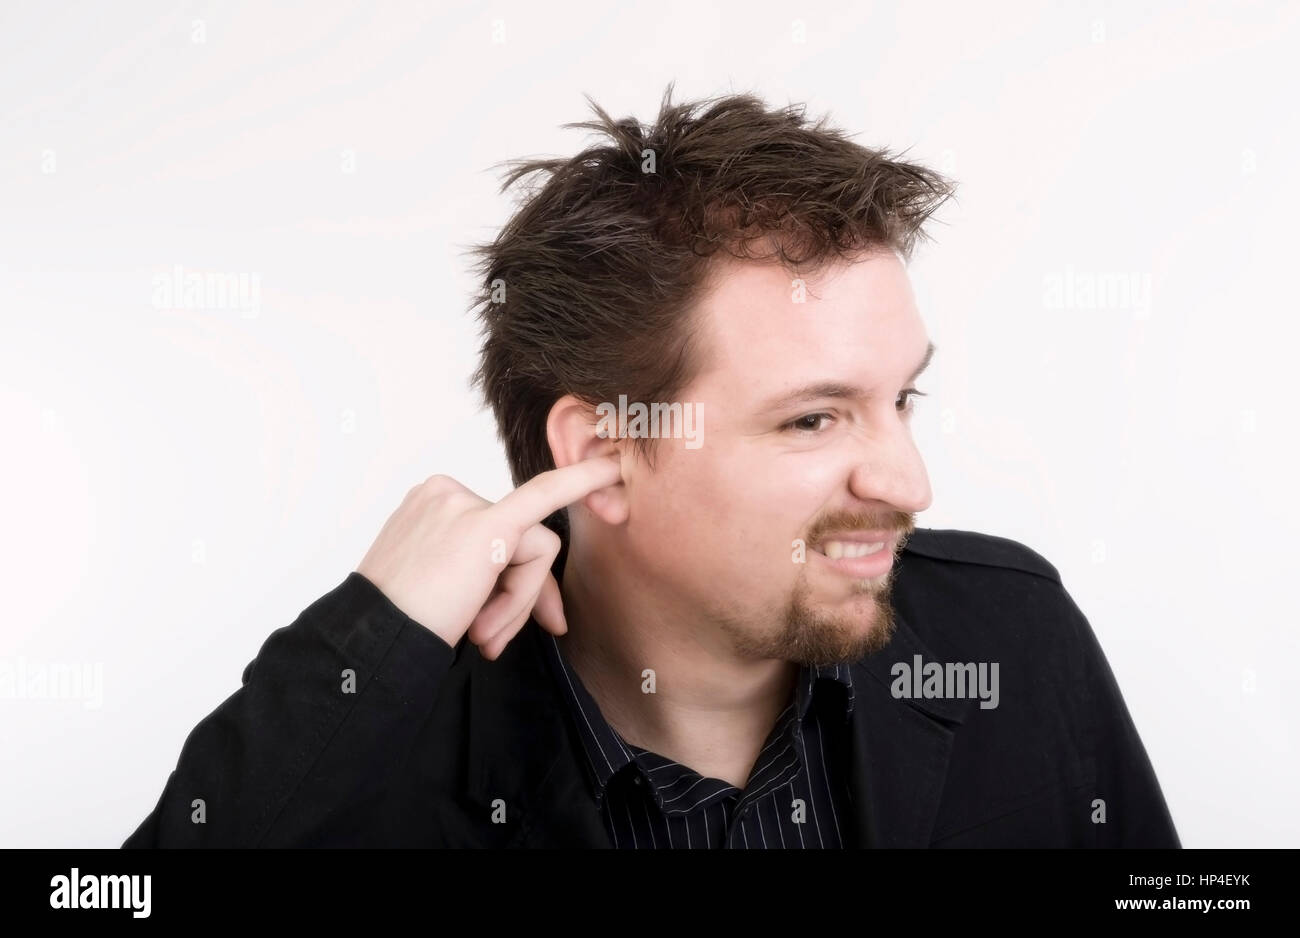 Model released , Junger Mann kratzt sich im Ohr - young man scratches in ear Stock Photo